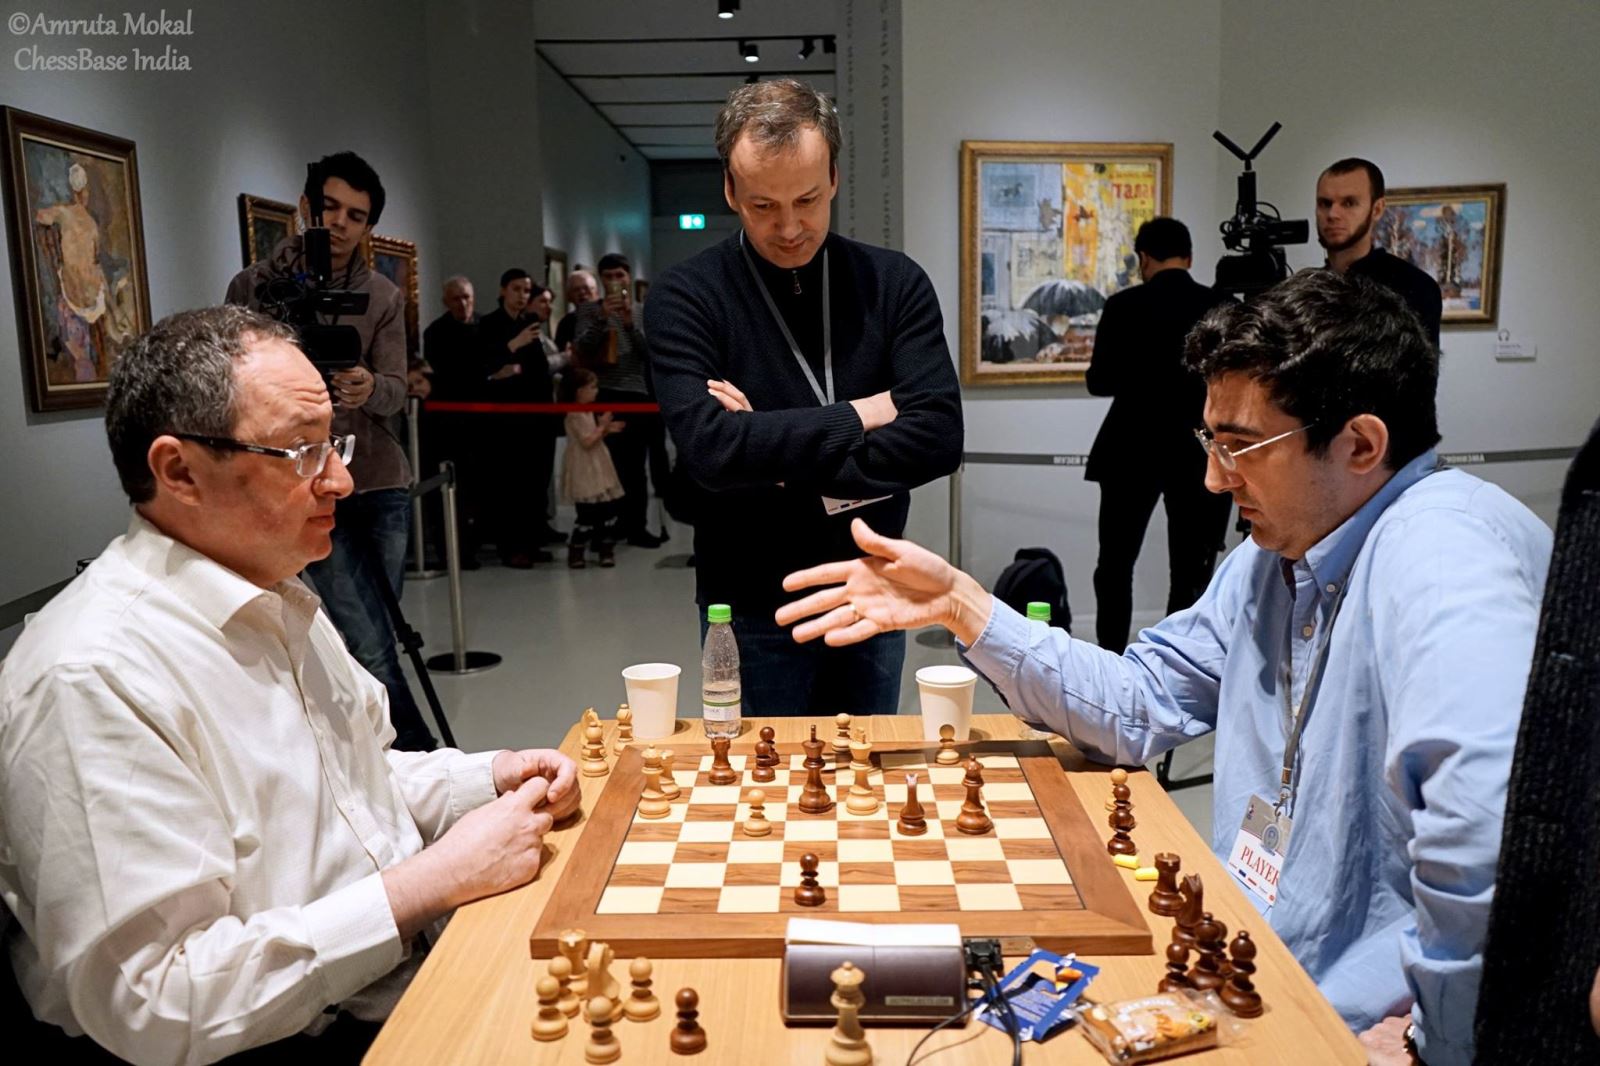 Kramnik and Gelfand